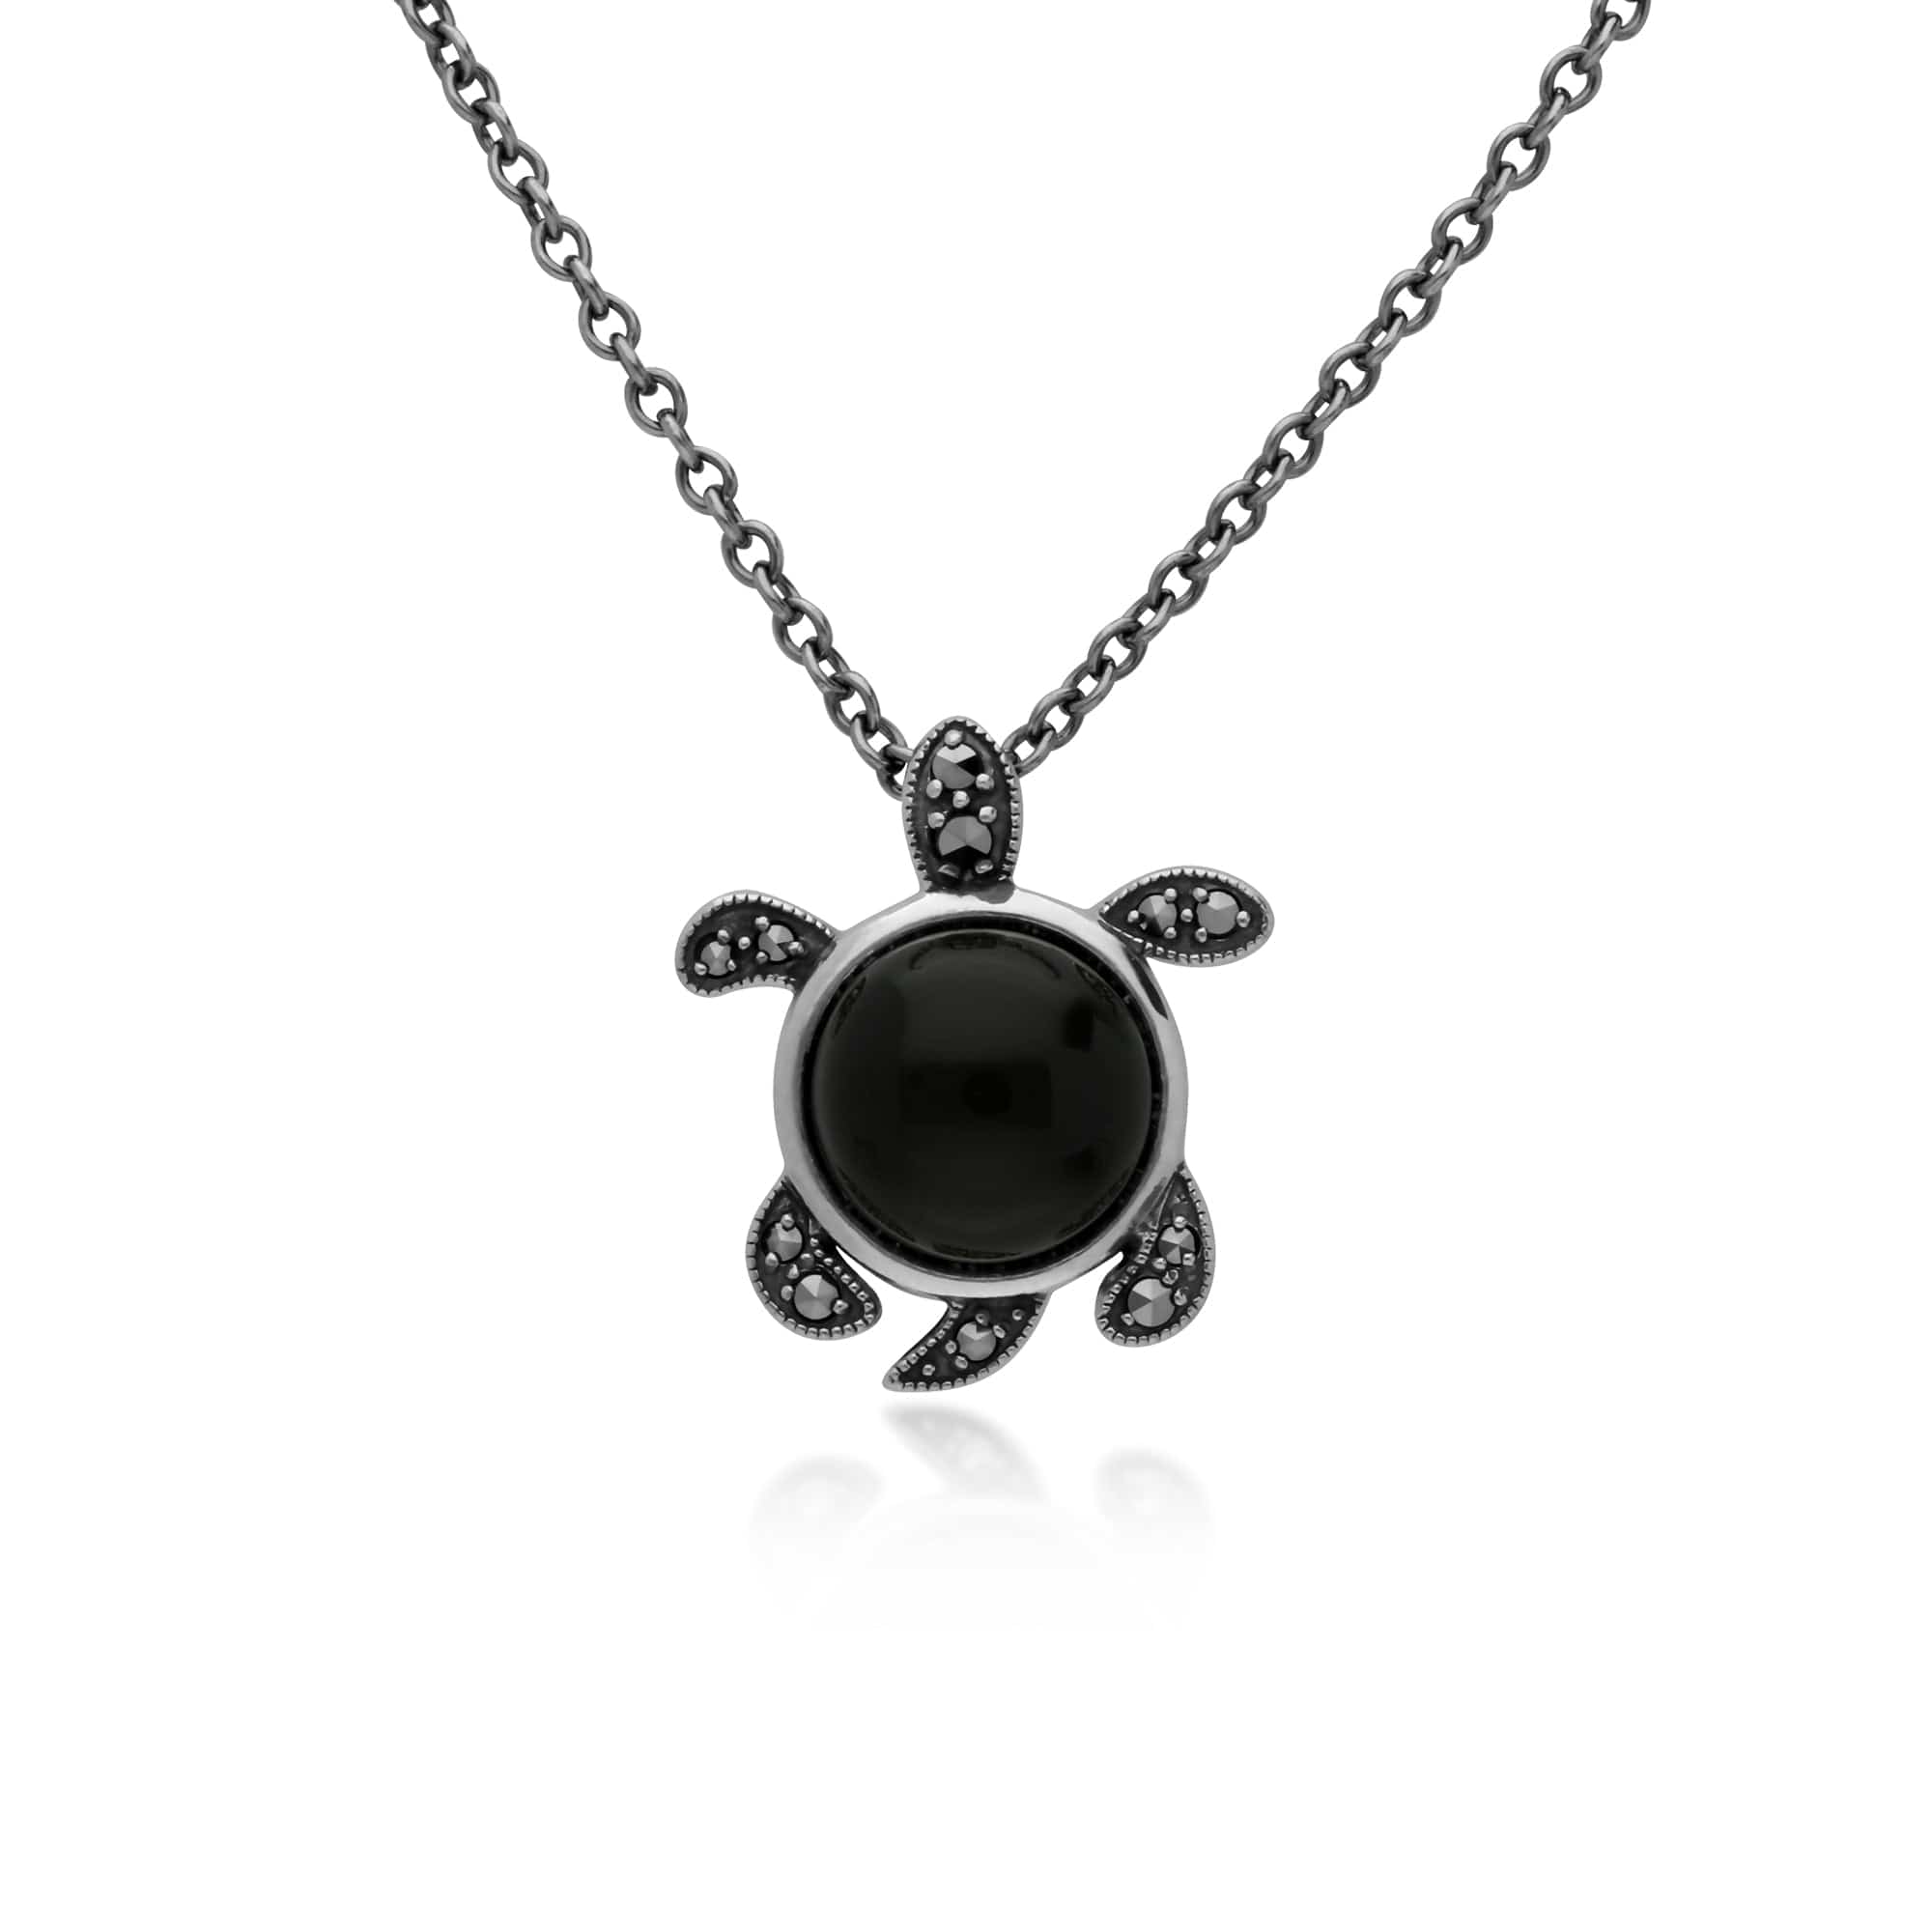 Gemondo Sterling Silver Black Onyx & Marcasite Turtle 45cm Necklace - Gemondo